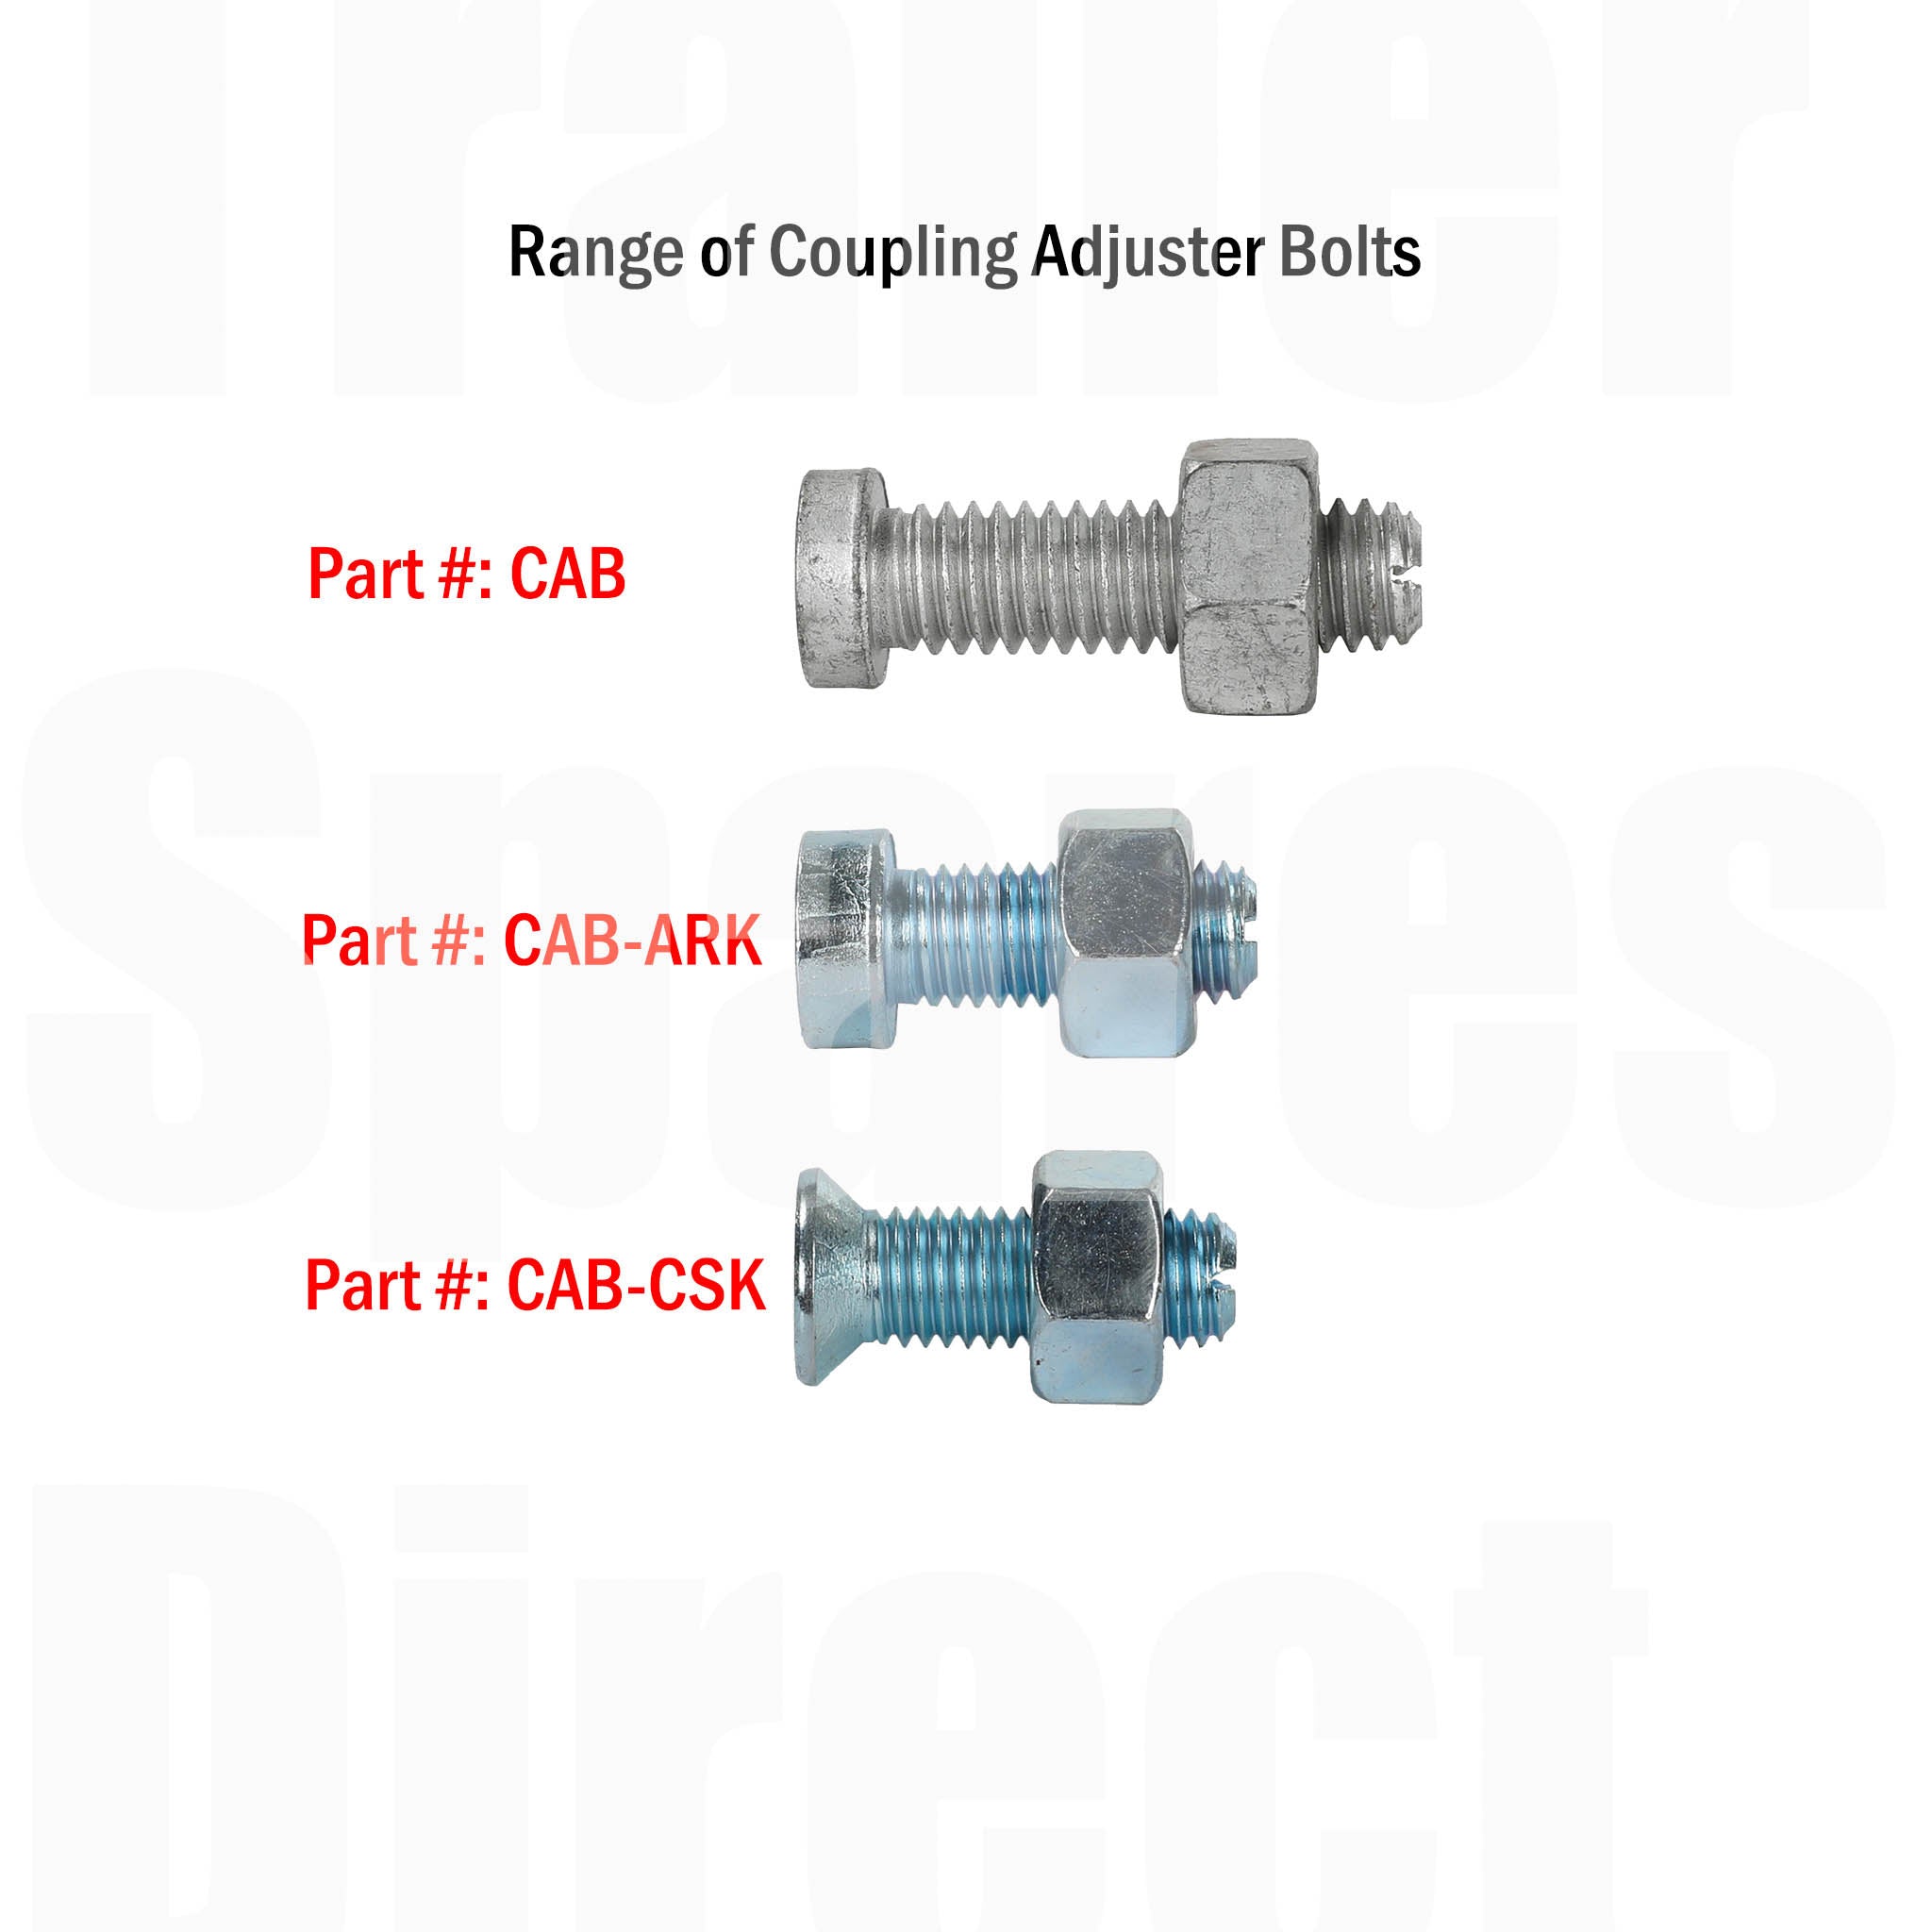 Coupling adjuster bolt for ARK 2 and 3 bolt couplings